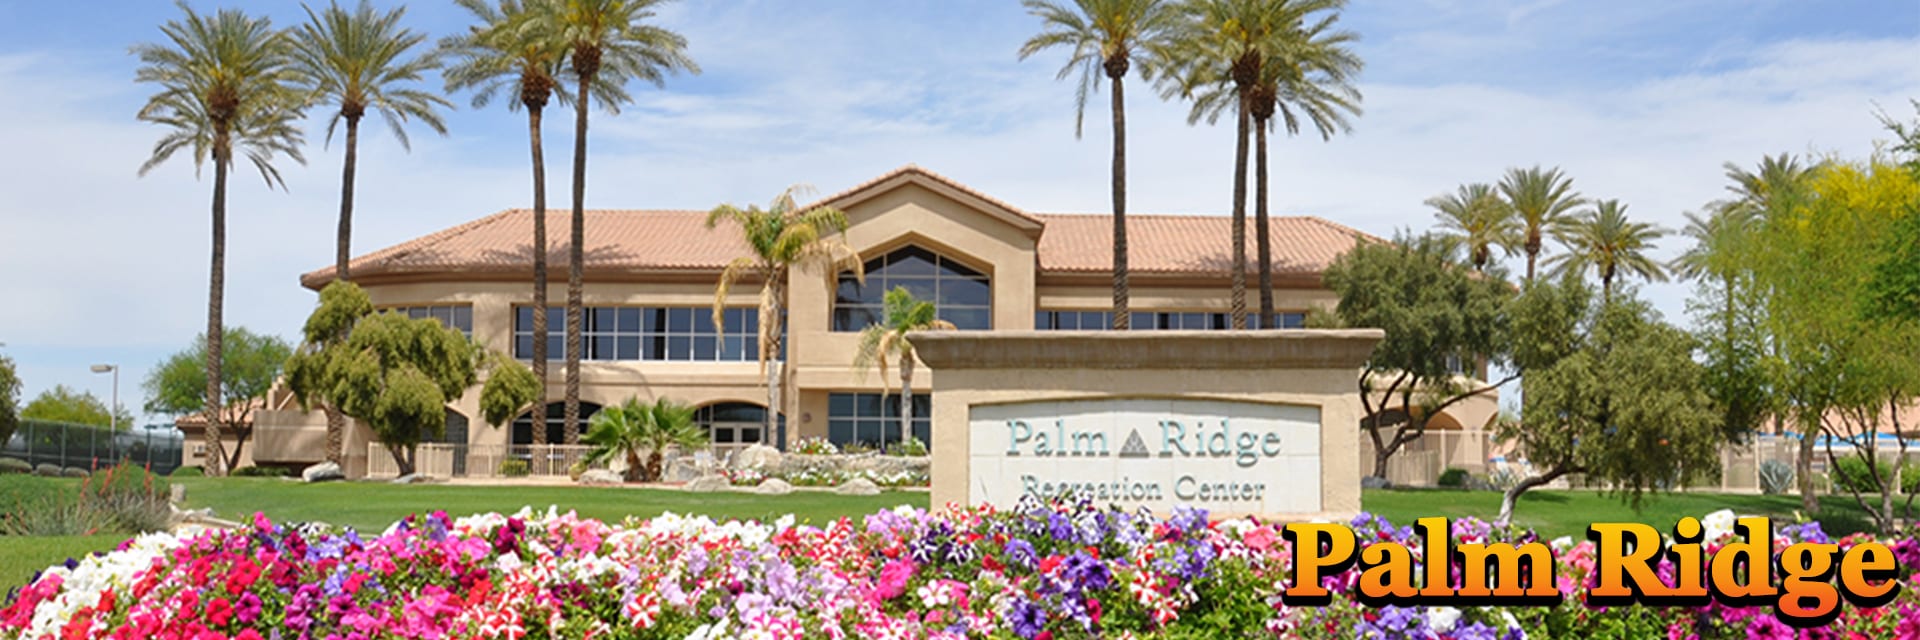 Palm Ridge Recreation Center at Sun City West AZ